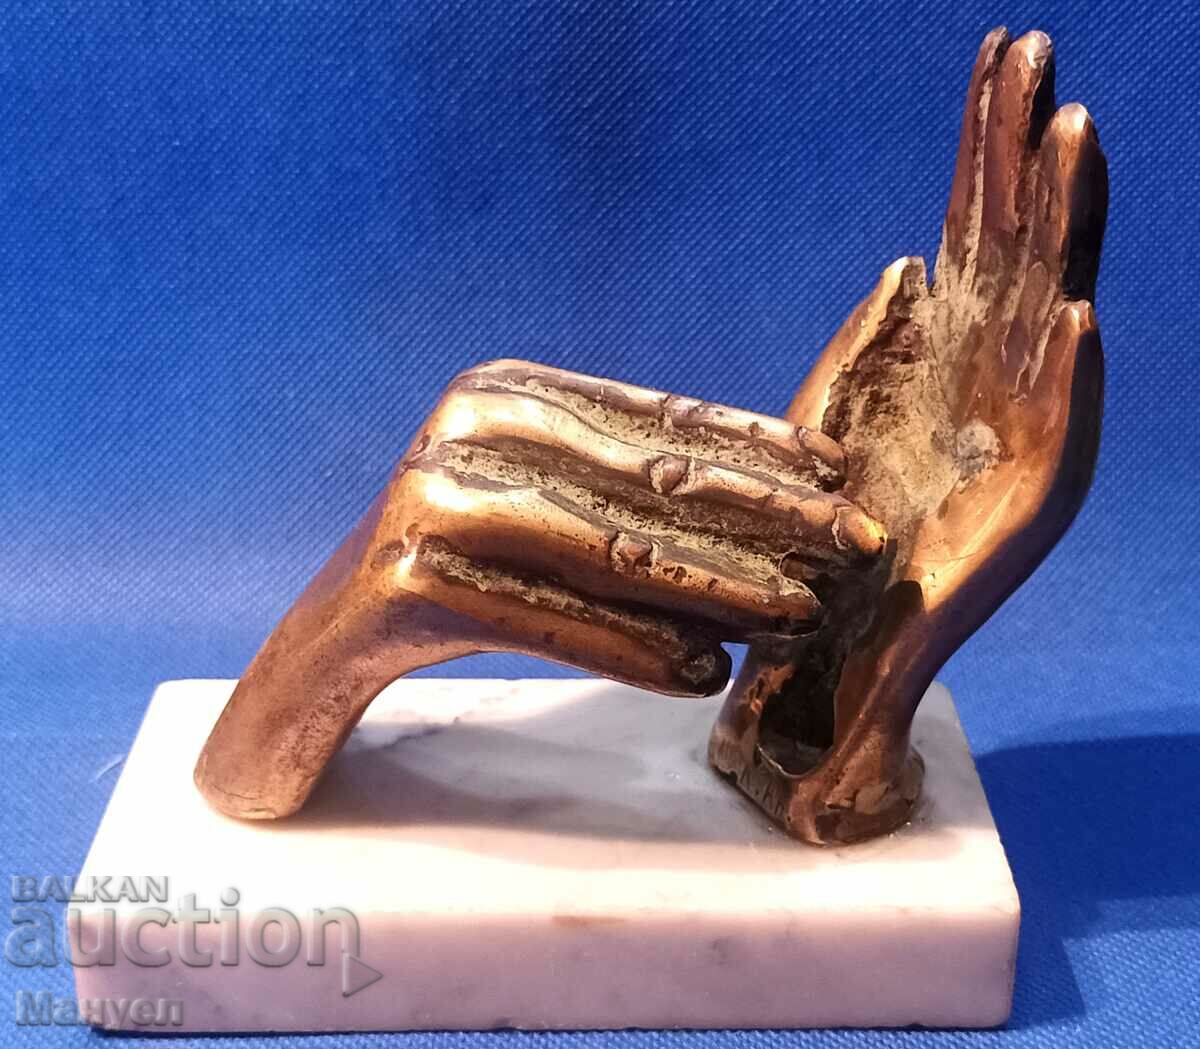 Beautiful sculpture "Hands".